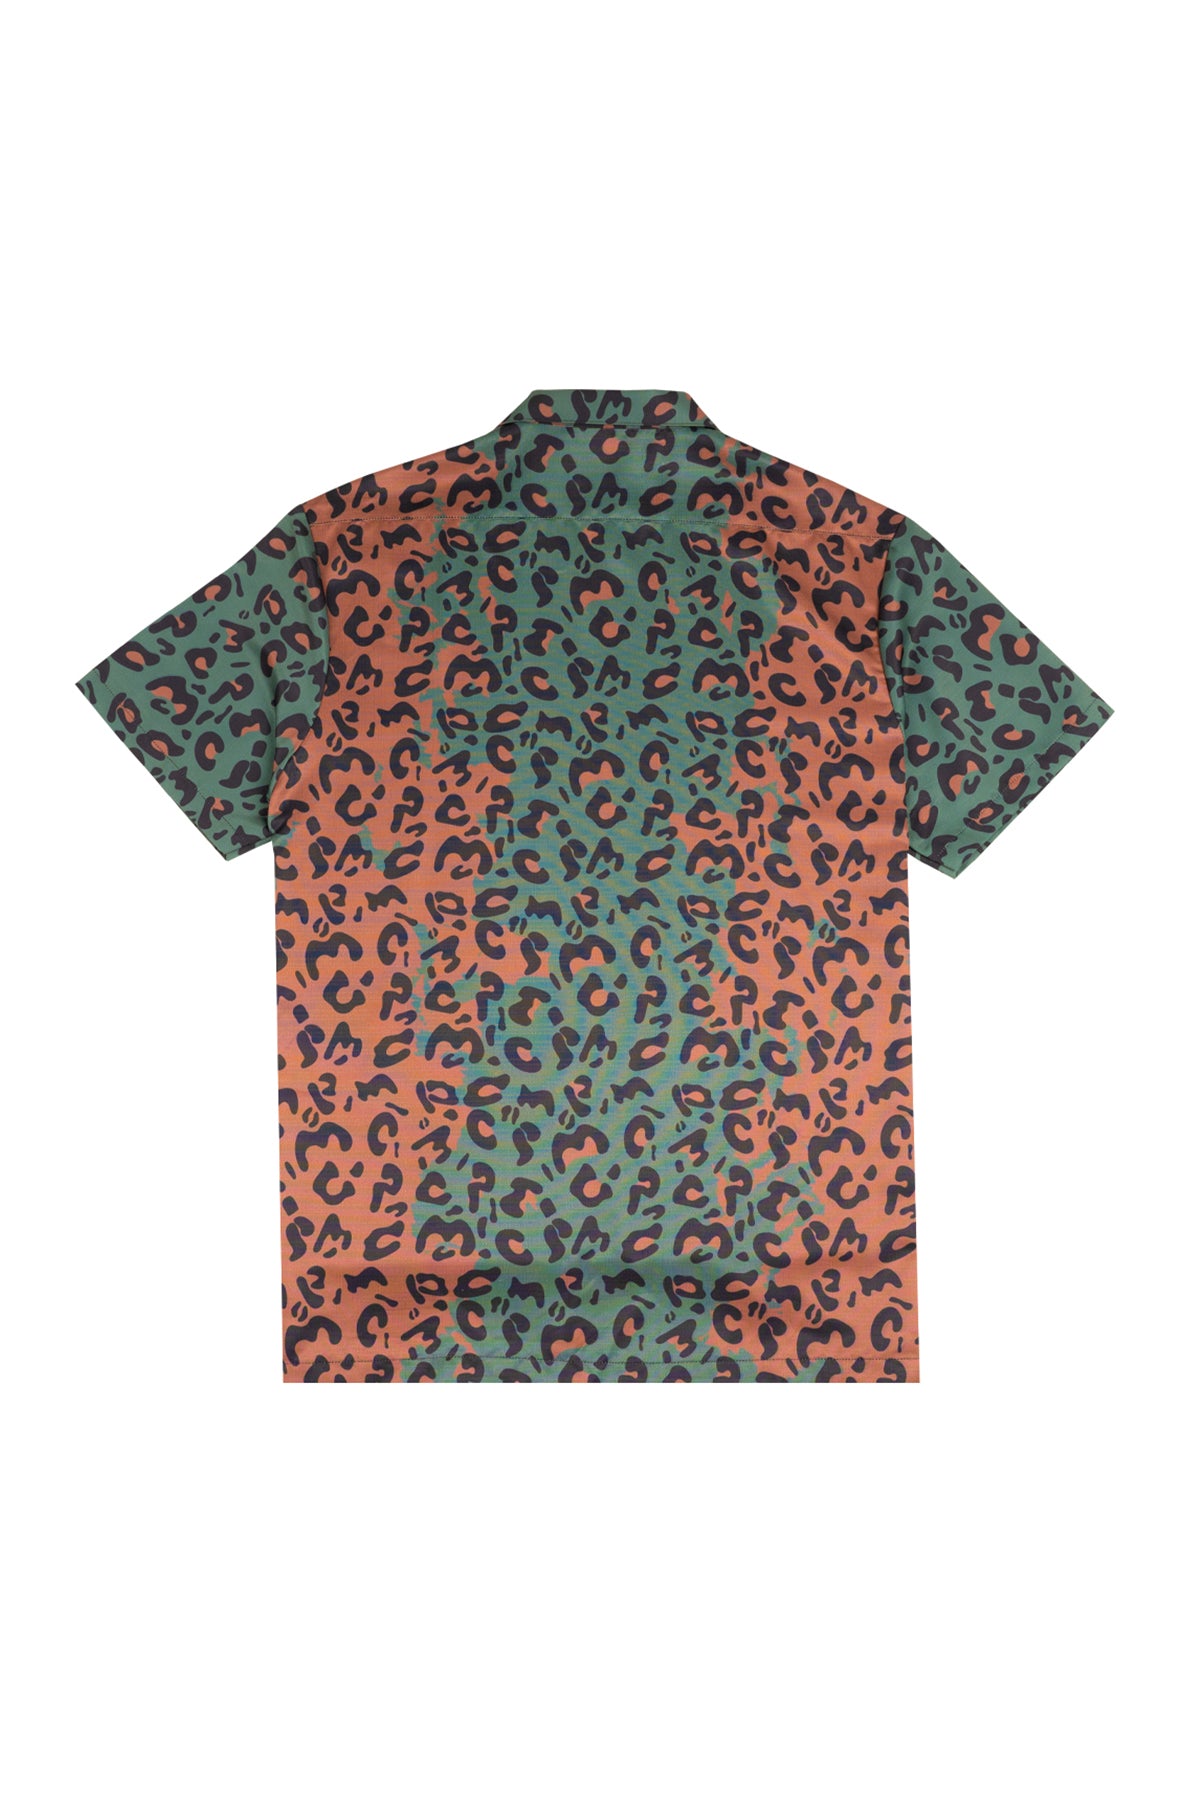 Leopard Print Bowling Shirt Green Brown